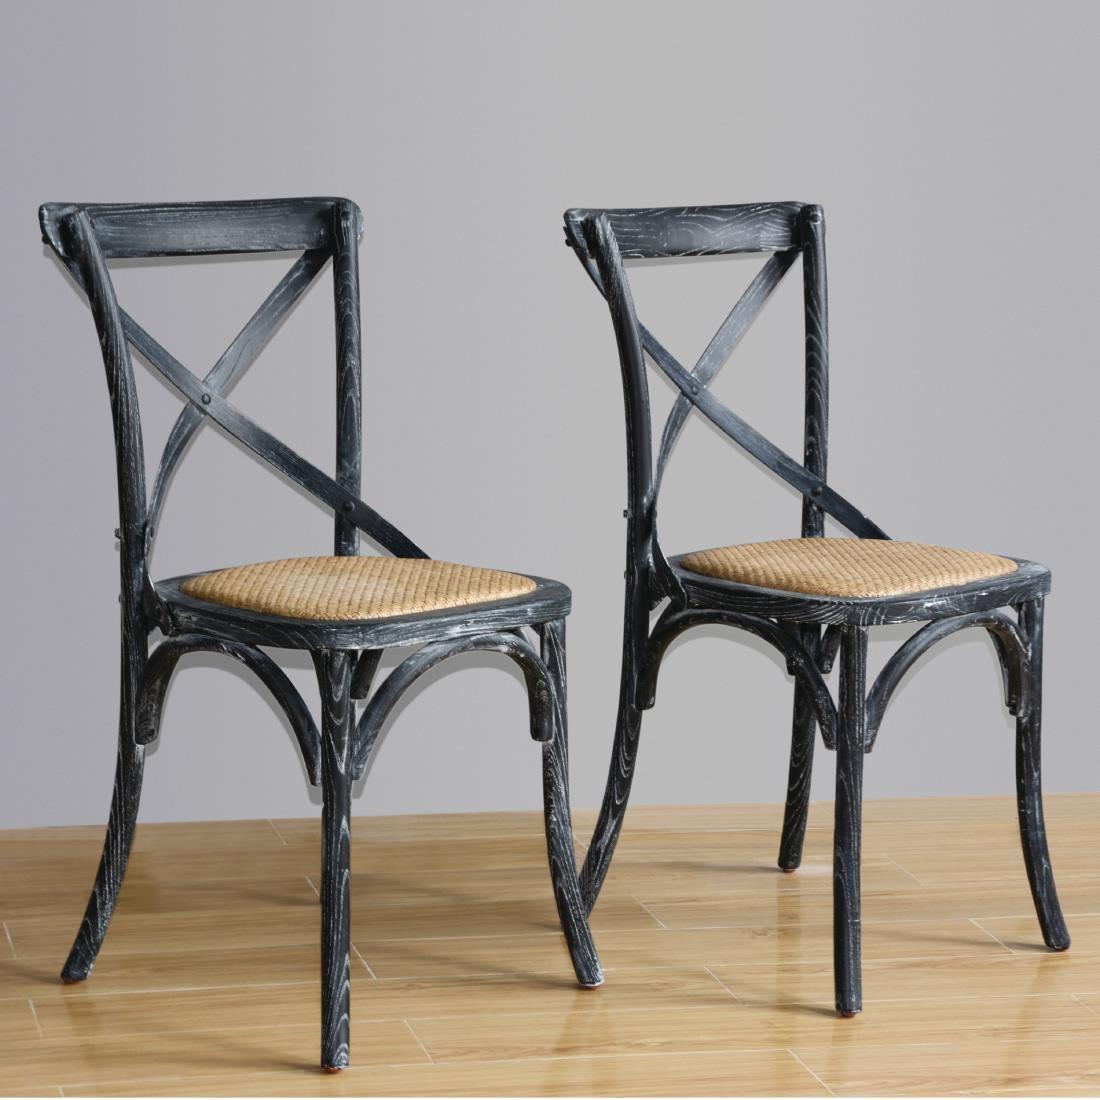 GG654 - Bolero Wooden Dining Chair with Cross Backrest Black Wash Finish (Box 2) - GG654  - 3